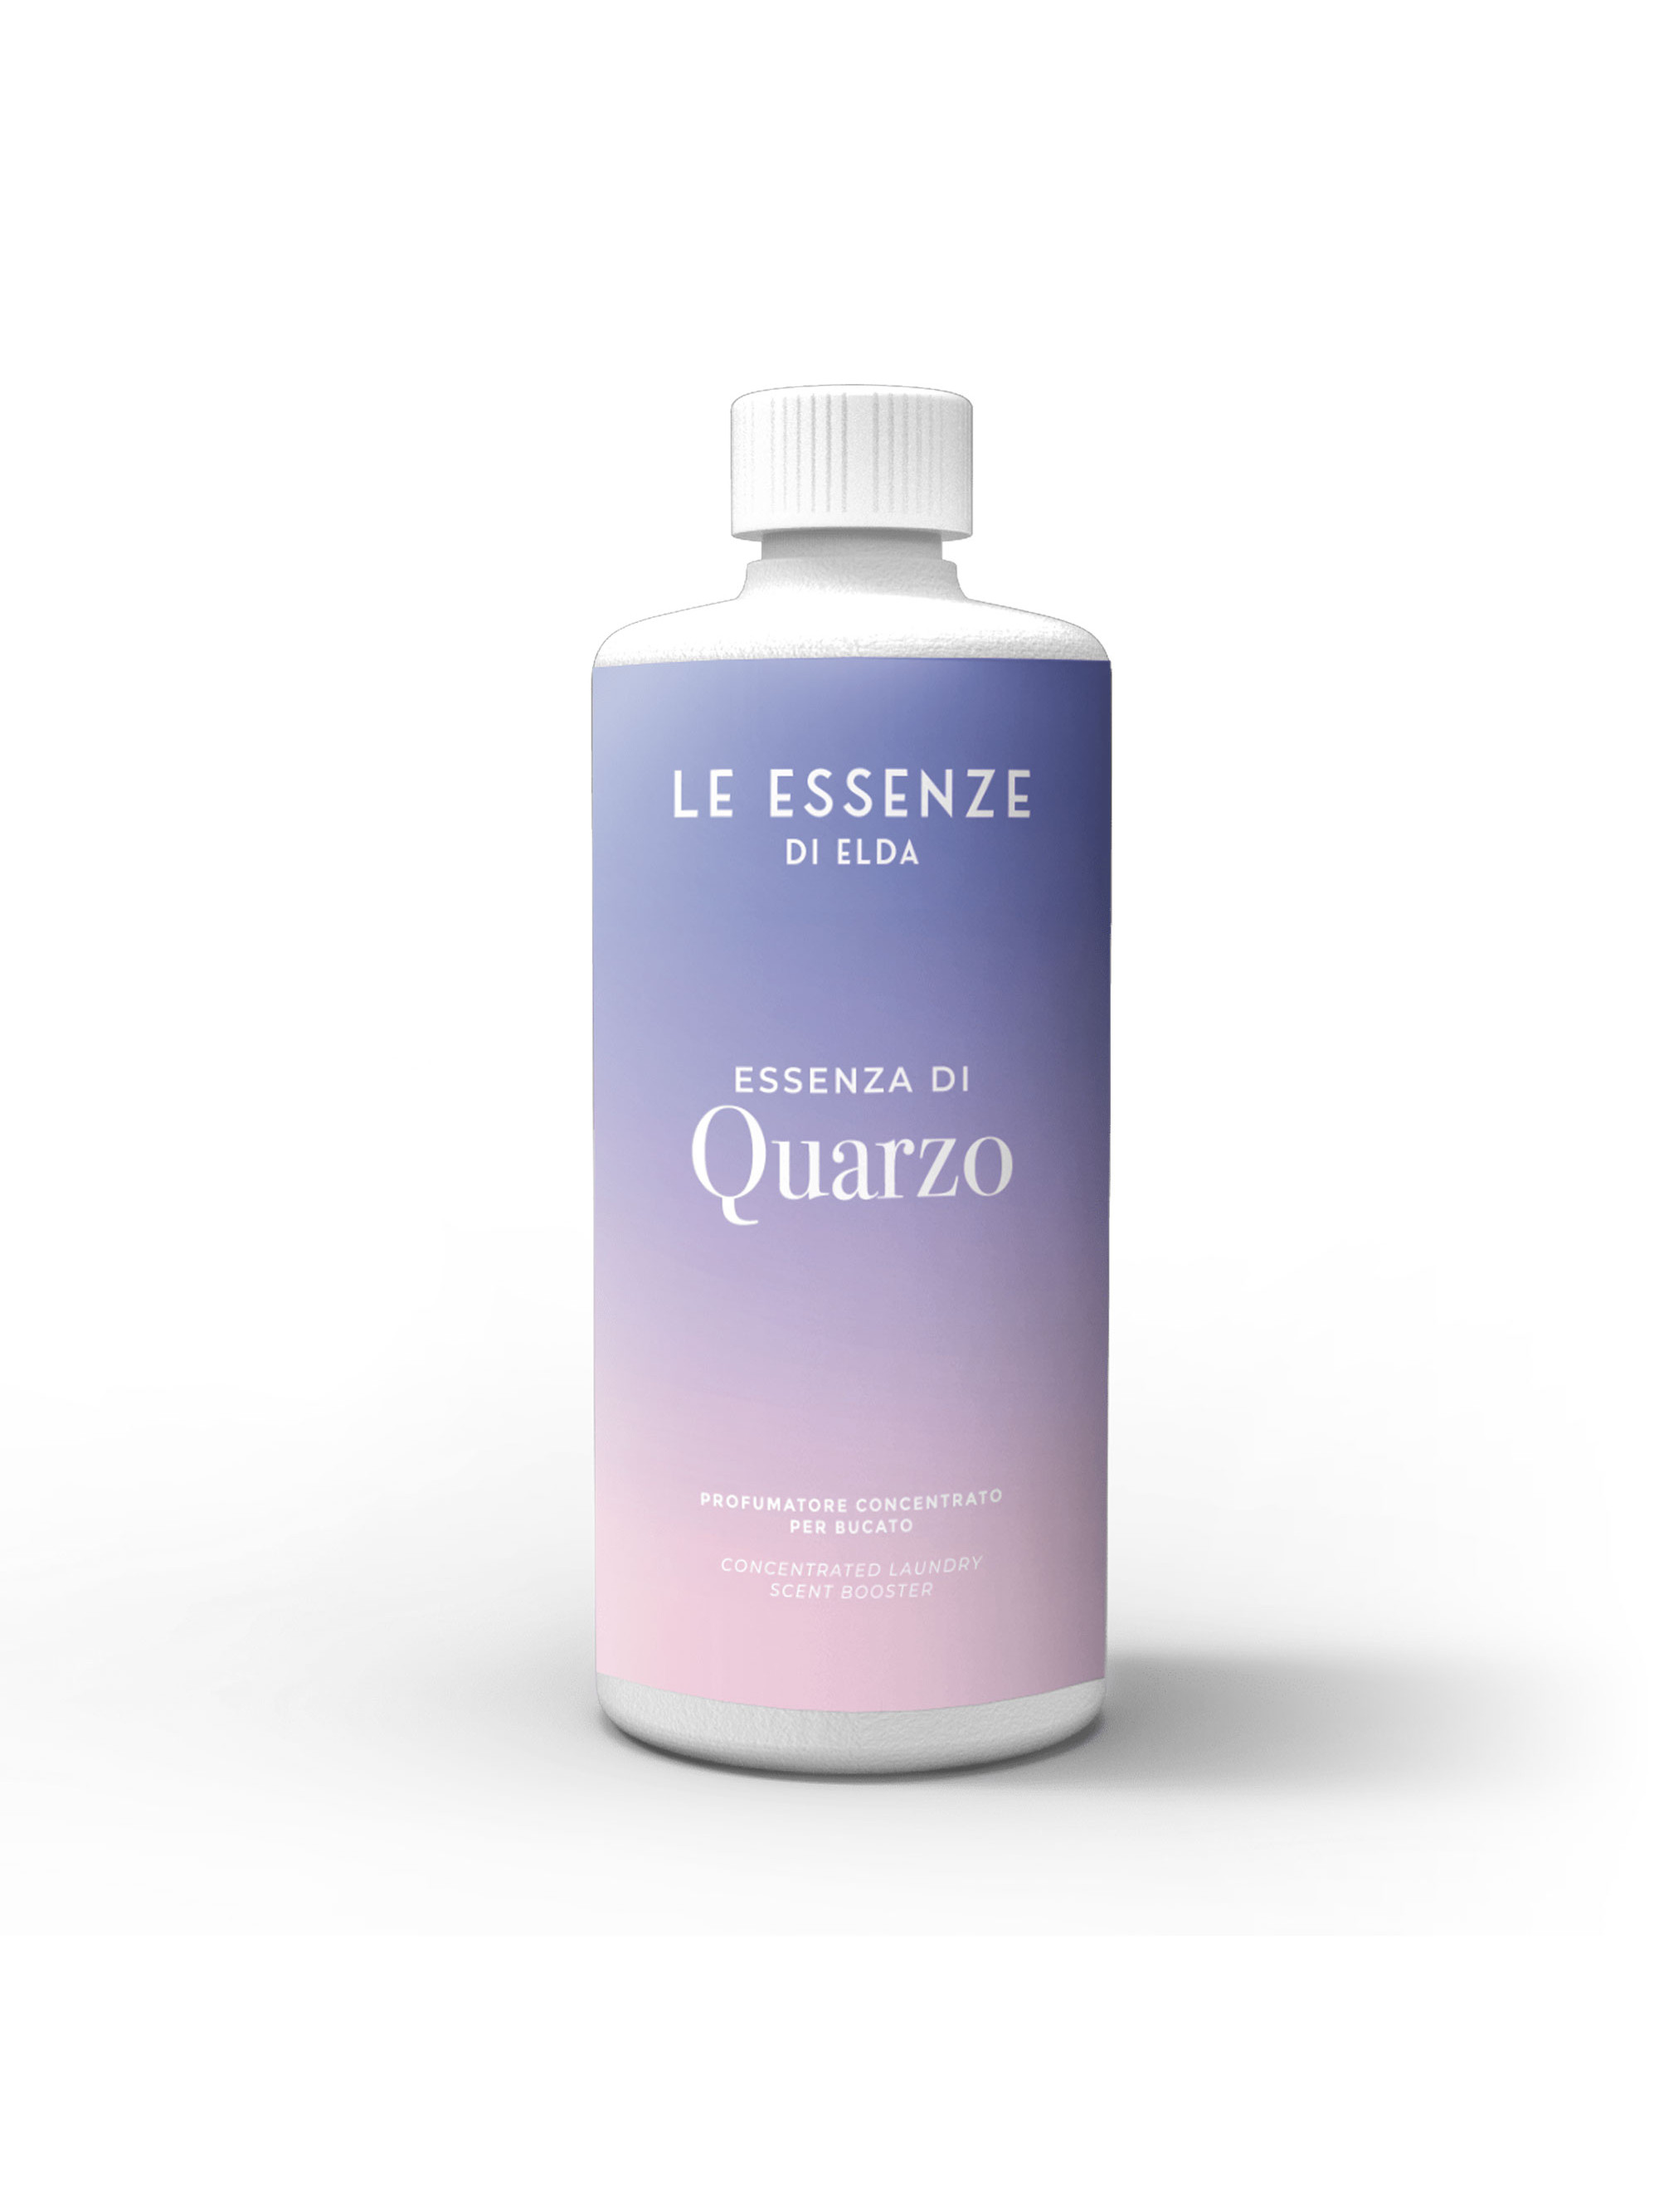 Essenza Quarzo - 500ml laundry perfumer